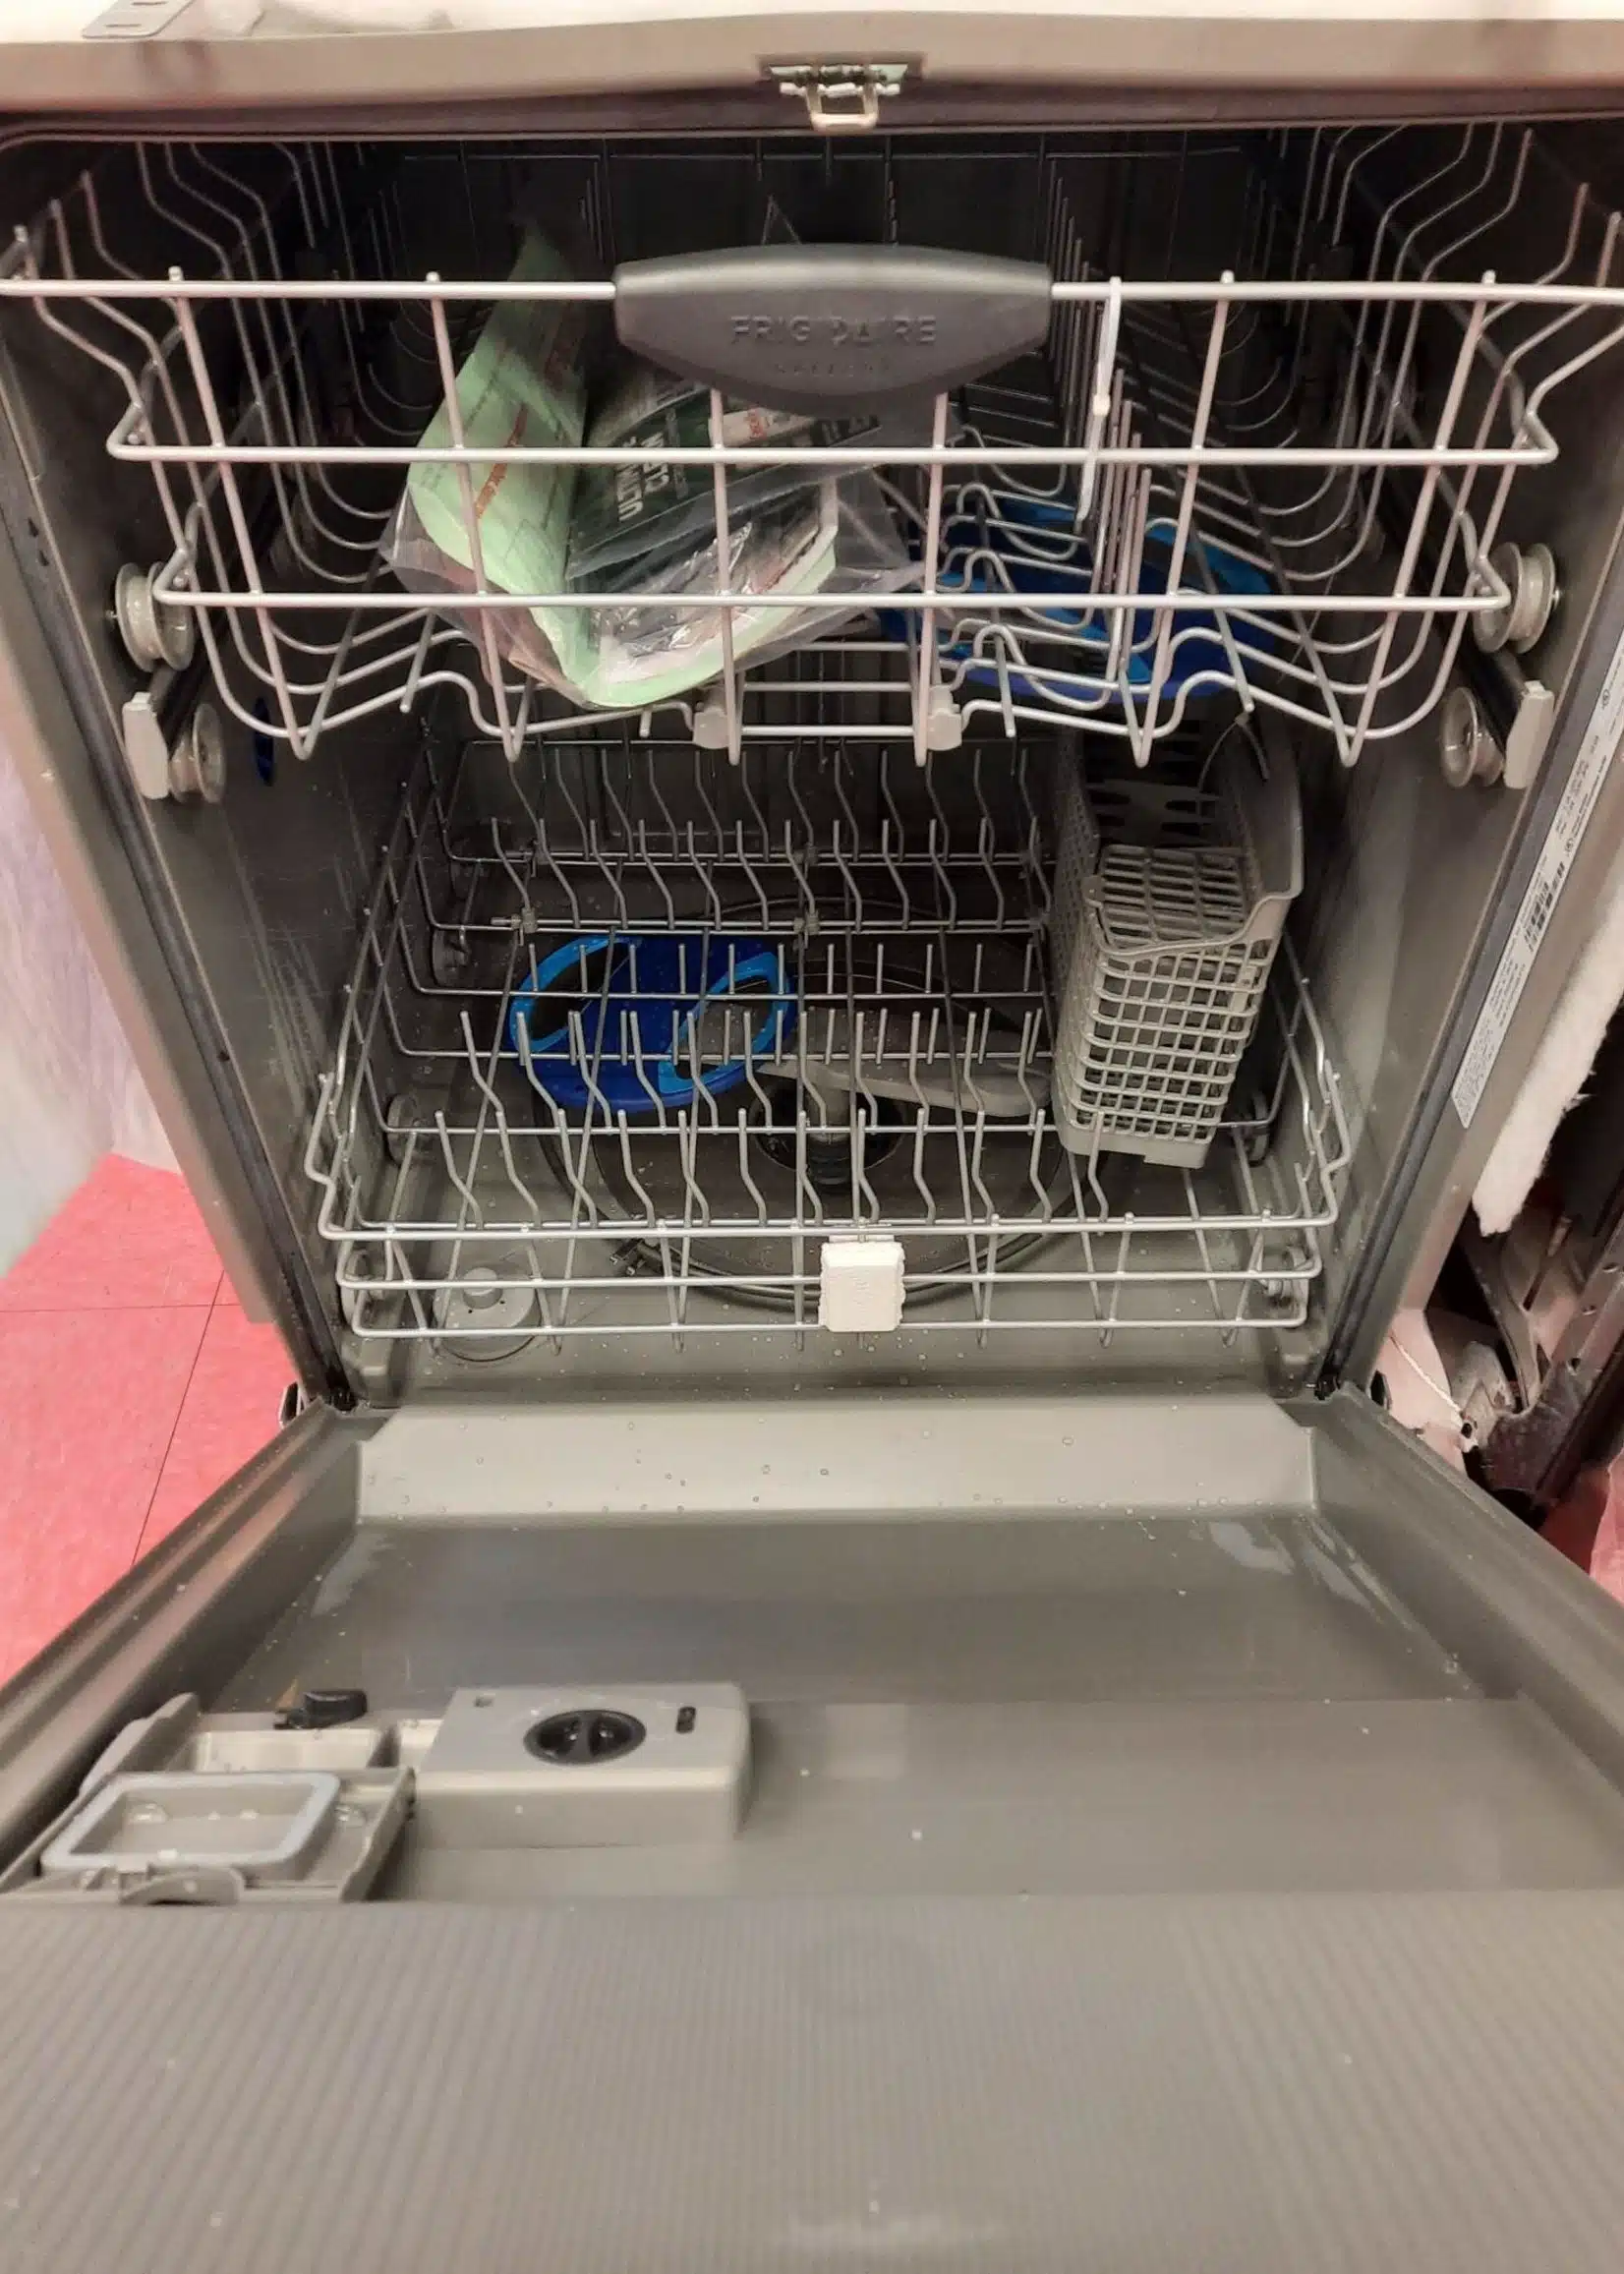 dishwasher brands to avoid uk